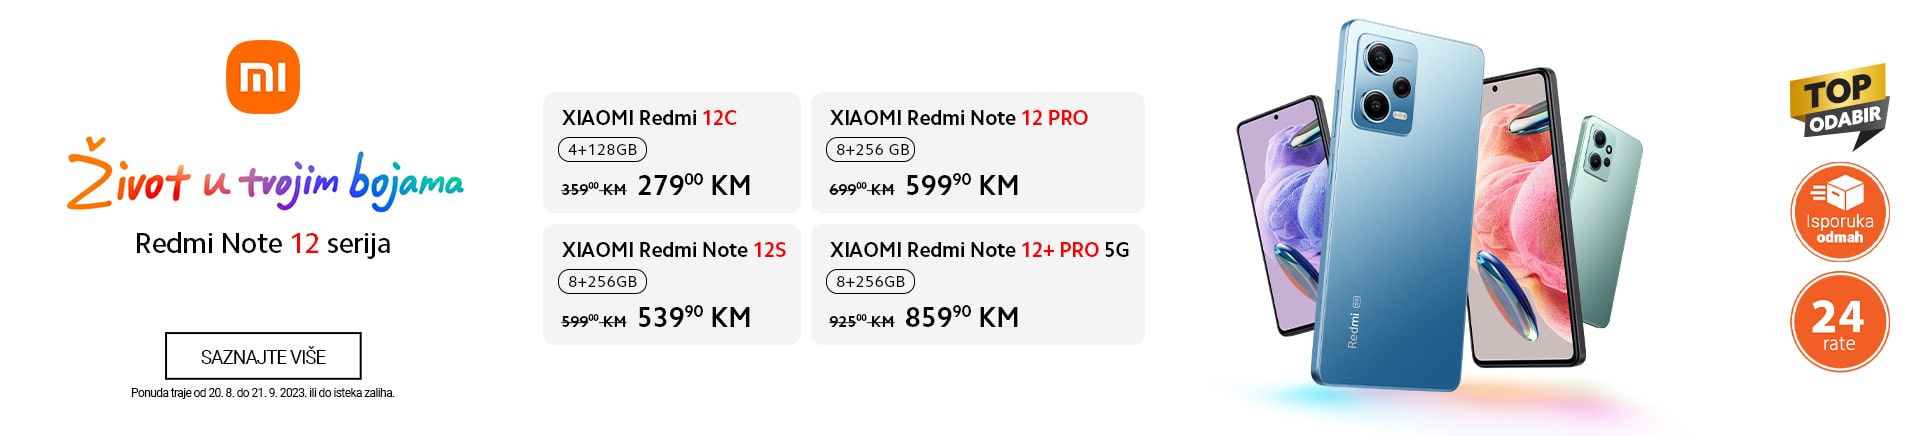 BA-Xiaomi-Note-MOBILE 380 X 436-min.jpg